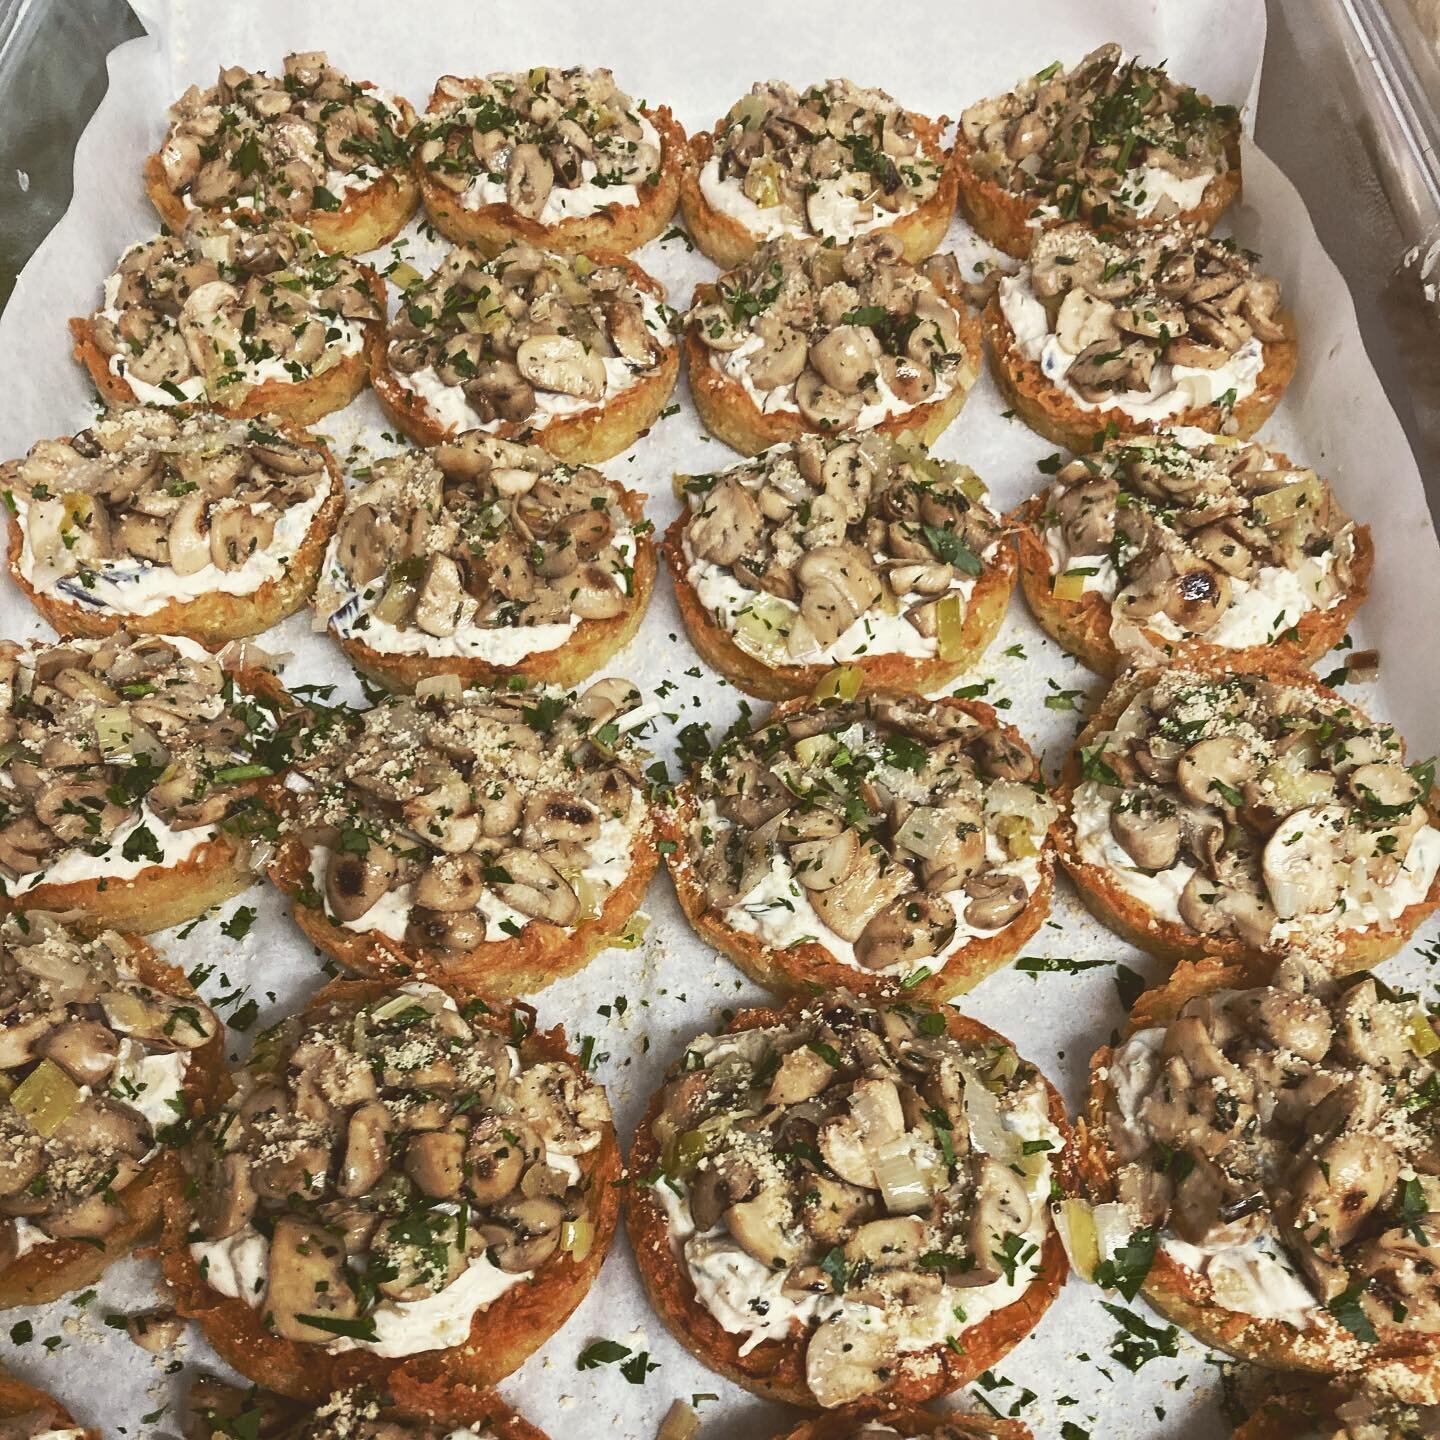 Mushroom, leek and vegan Parmesan tarts.  Part baked goods freshly frozen ready for delivery.  #vegan #glutenfree #wholesale